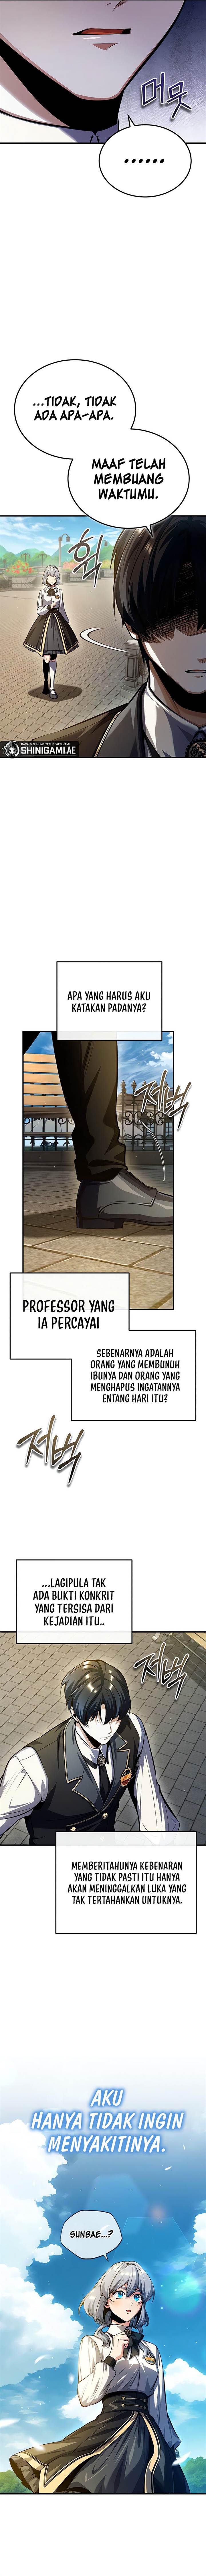 Academy’s Undercover Professor Chapter 74